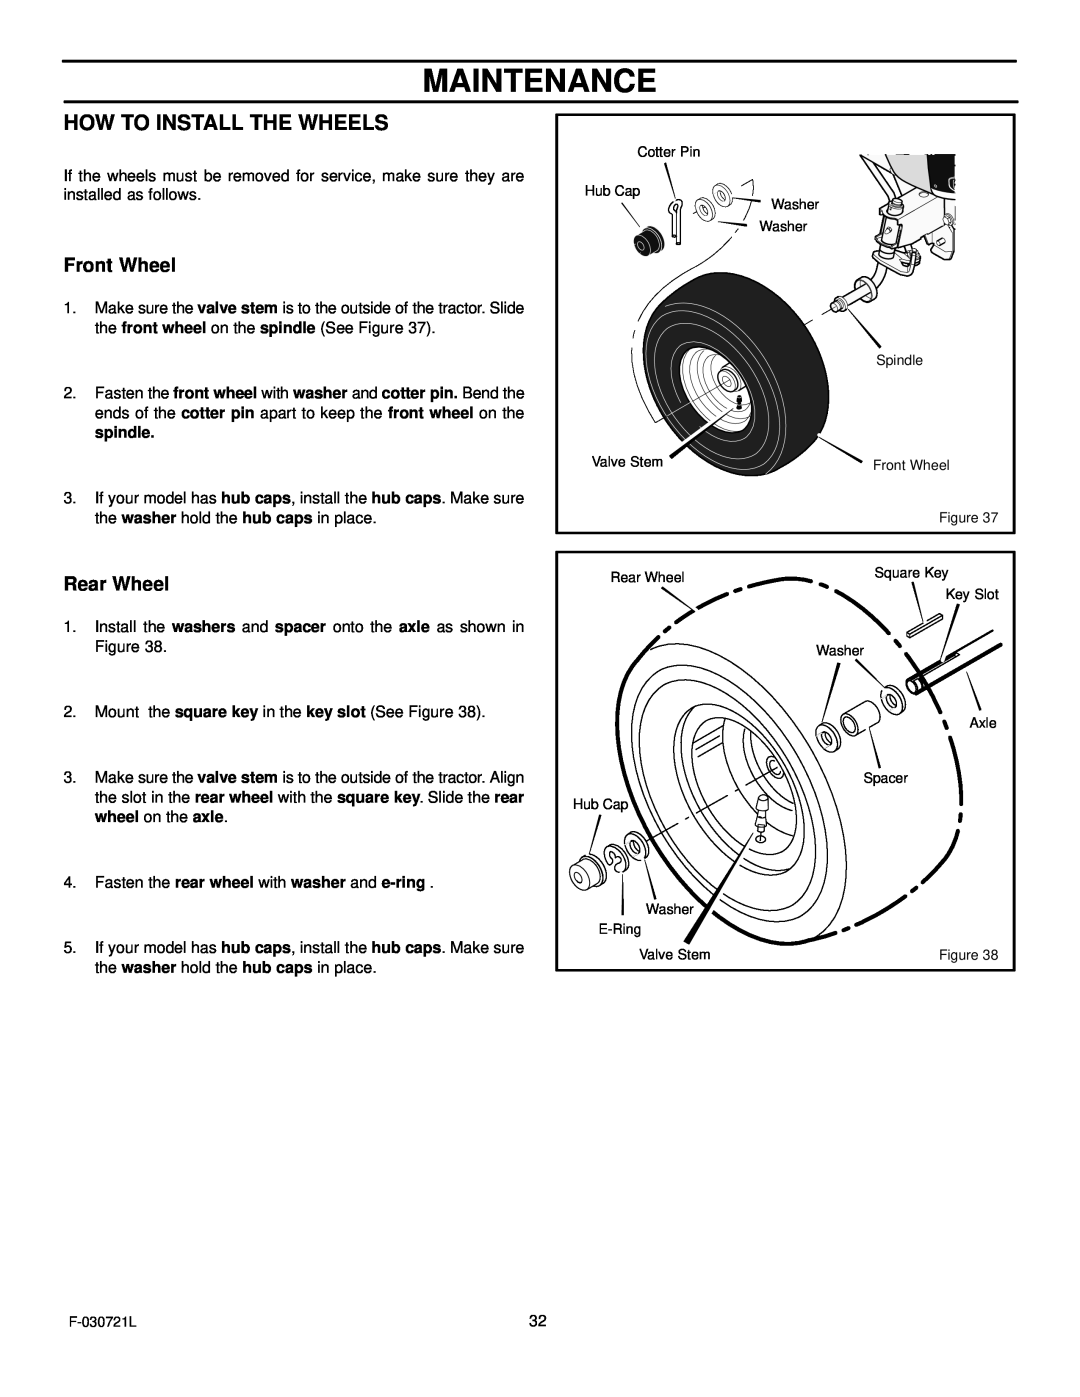 Murray 425007x92B manual Maintenance, How To Install The Wheels, Front Wheel, Rear Wheel 